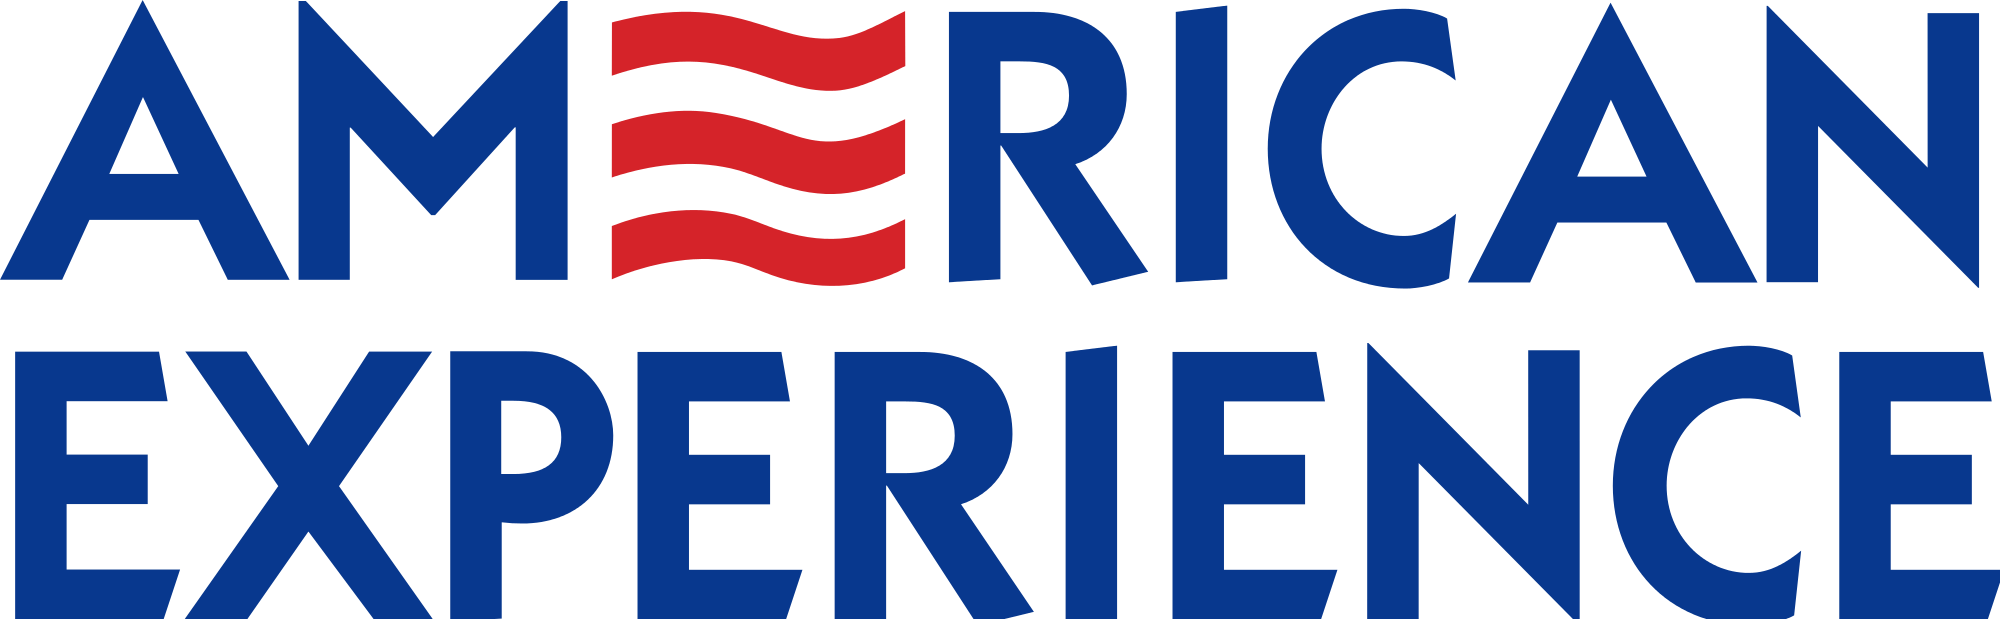 American Logo - American Experience logo.svg